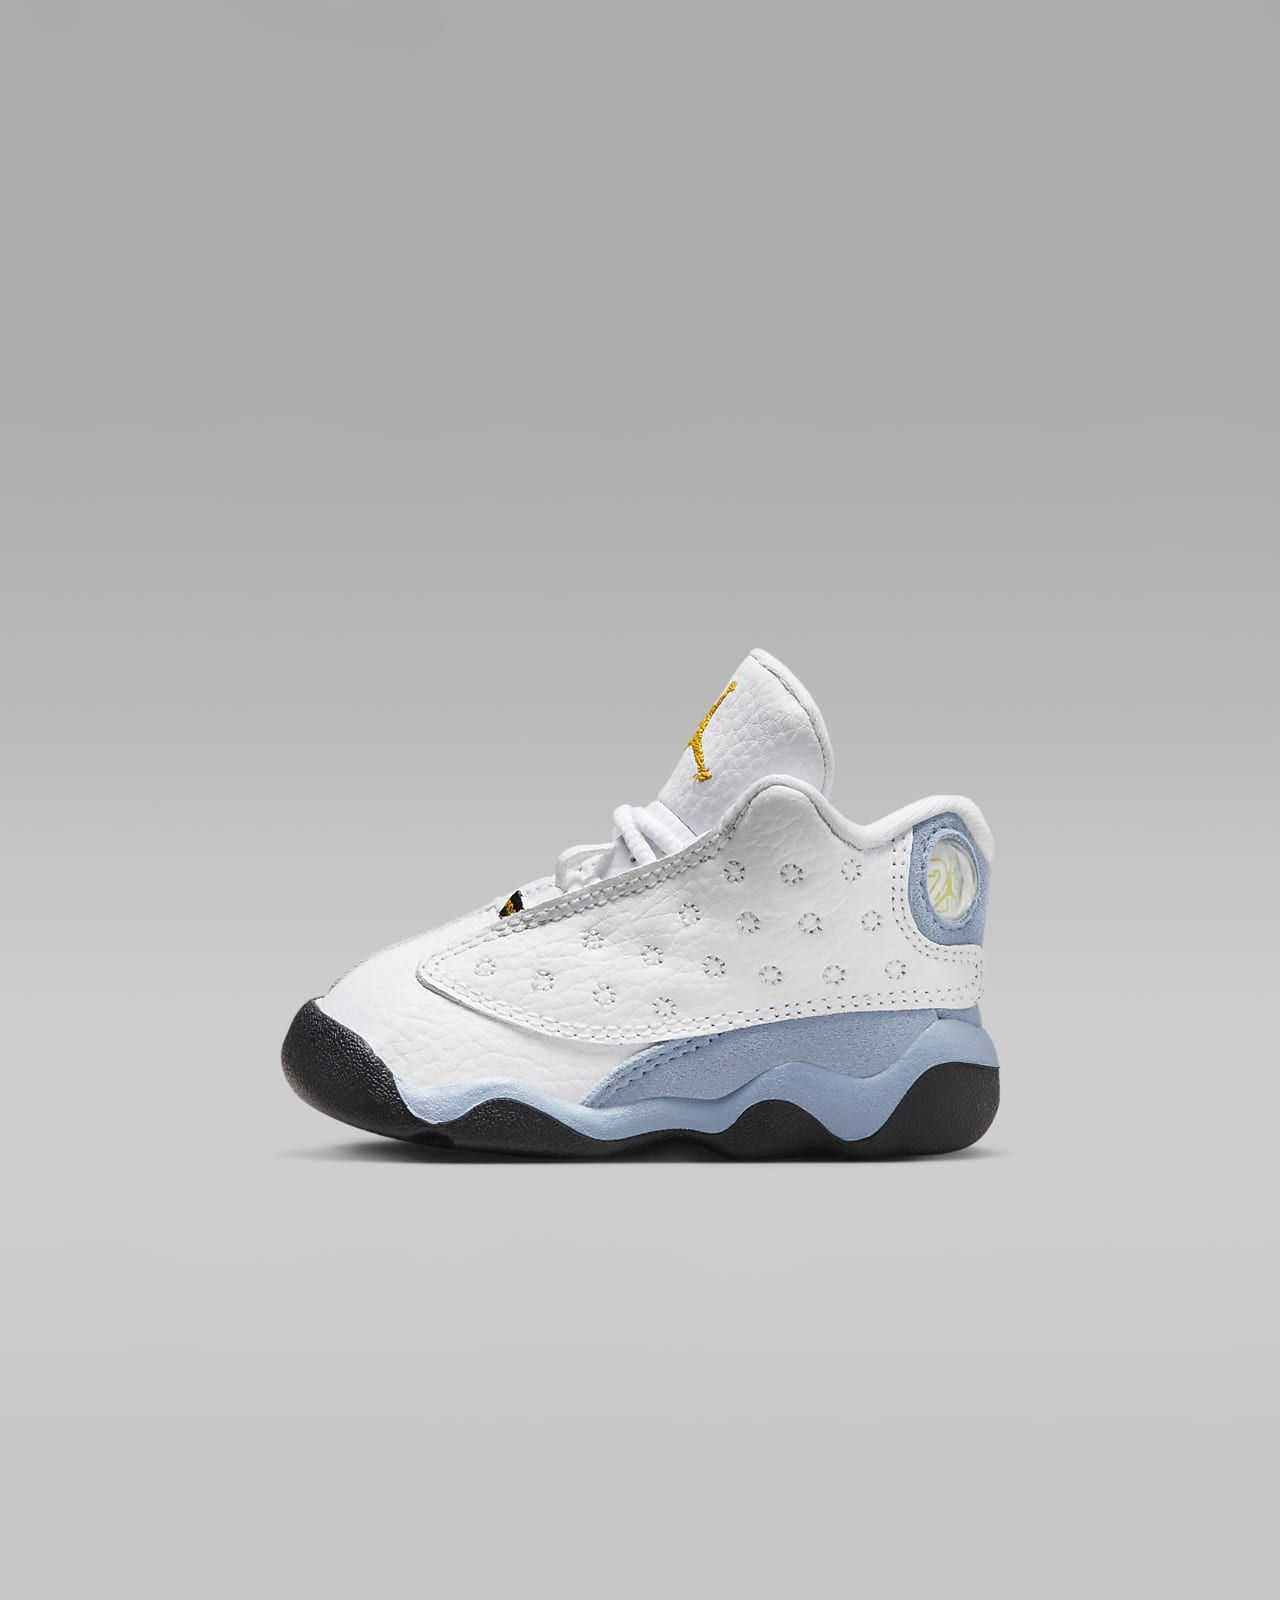 Jordan 13 Retro "Blue Grey" | Nike (US)